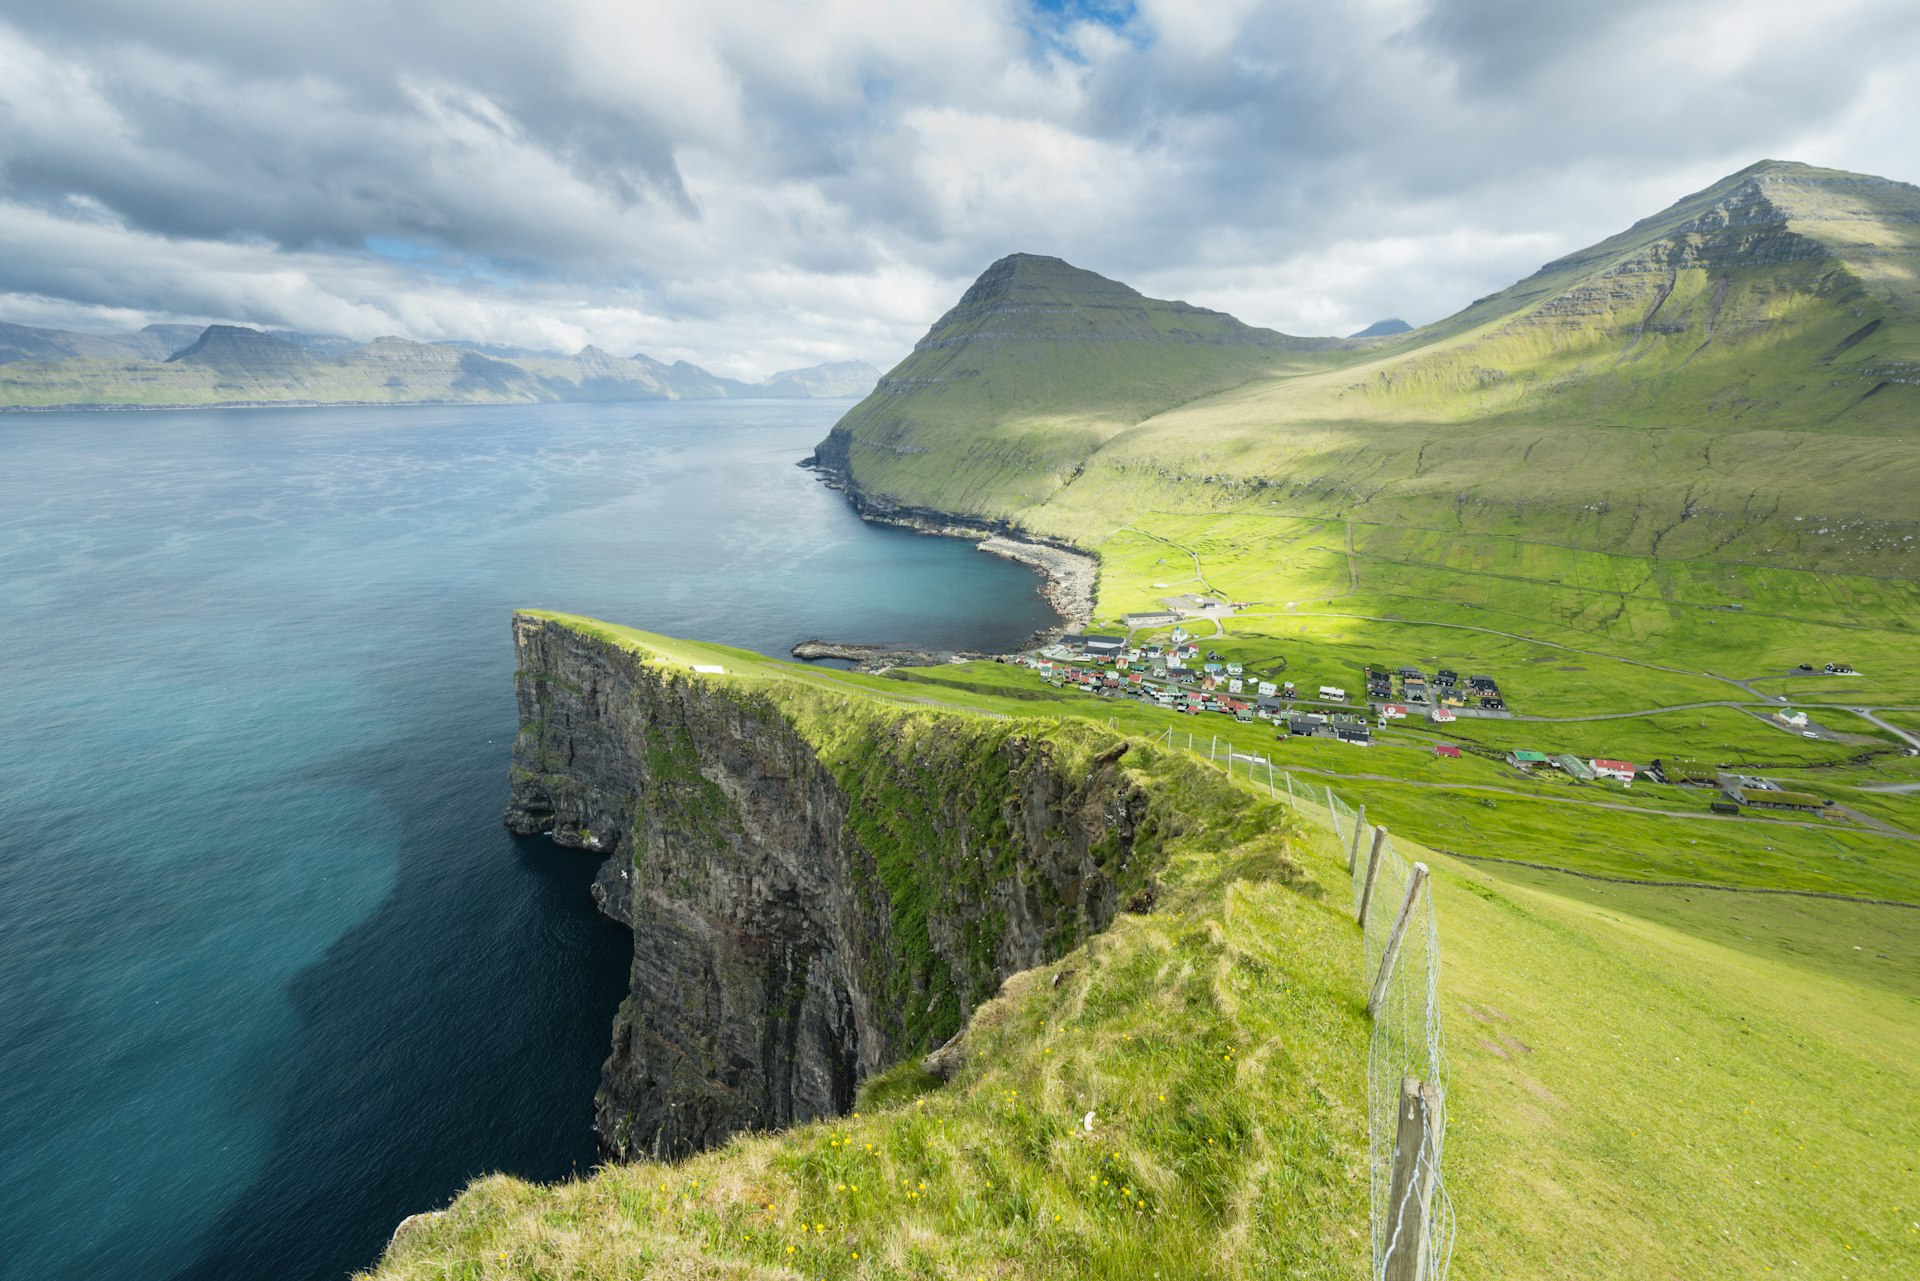 Expanisve sea and farmland views at Gjogv, Faroe Islands